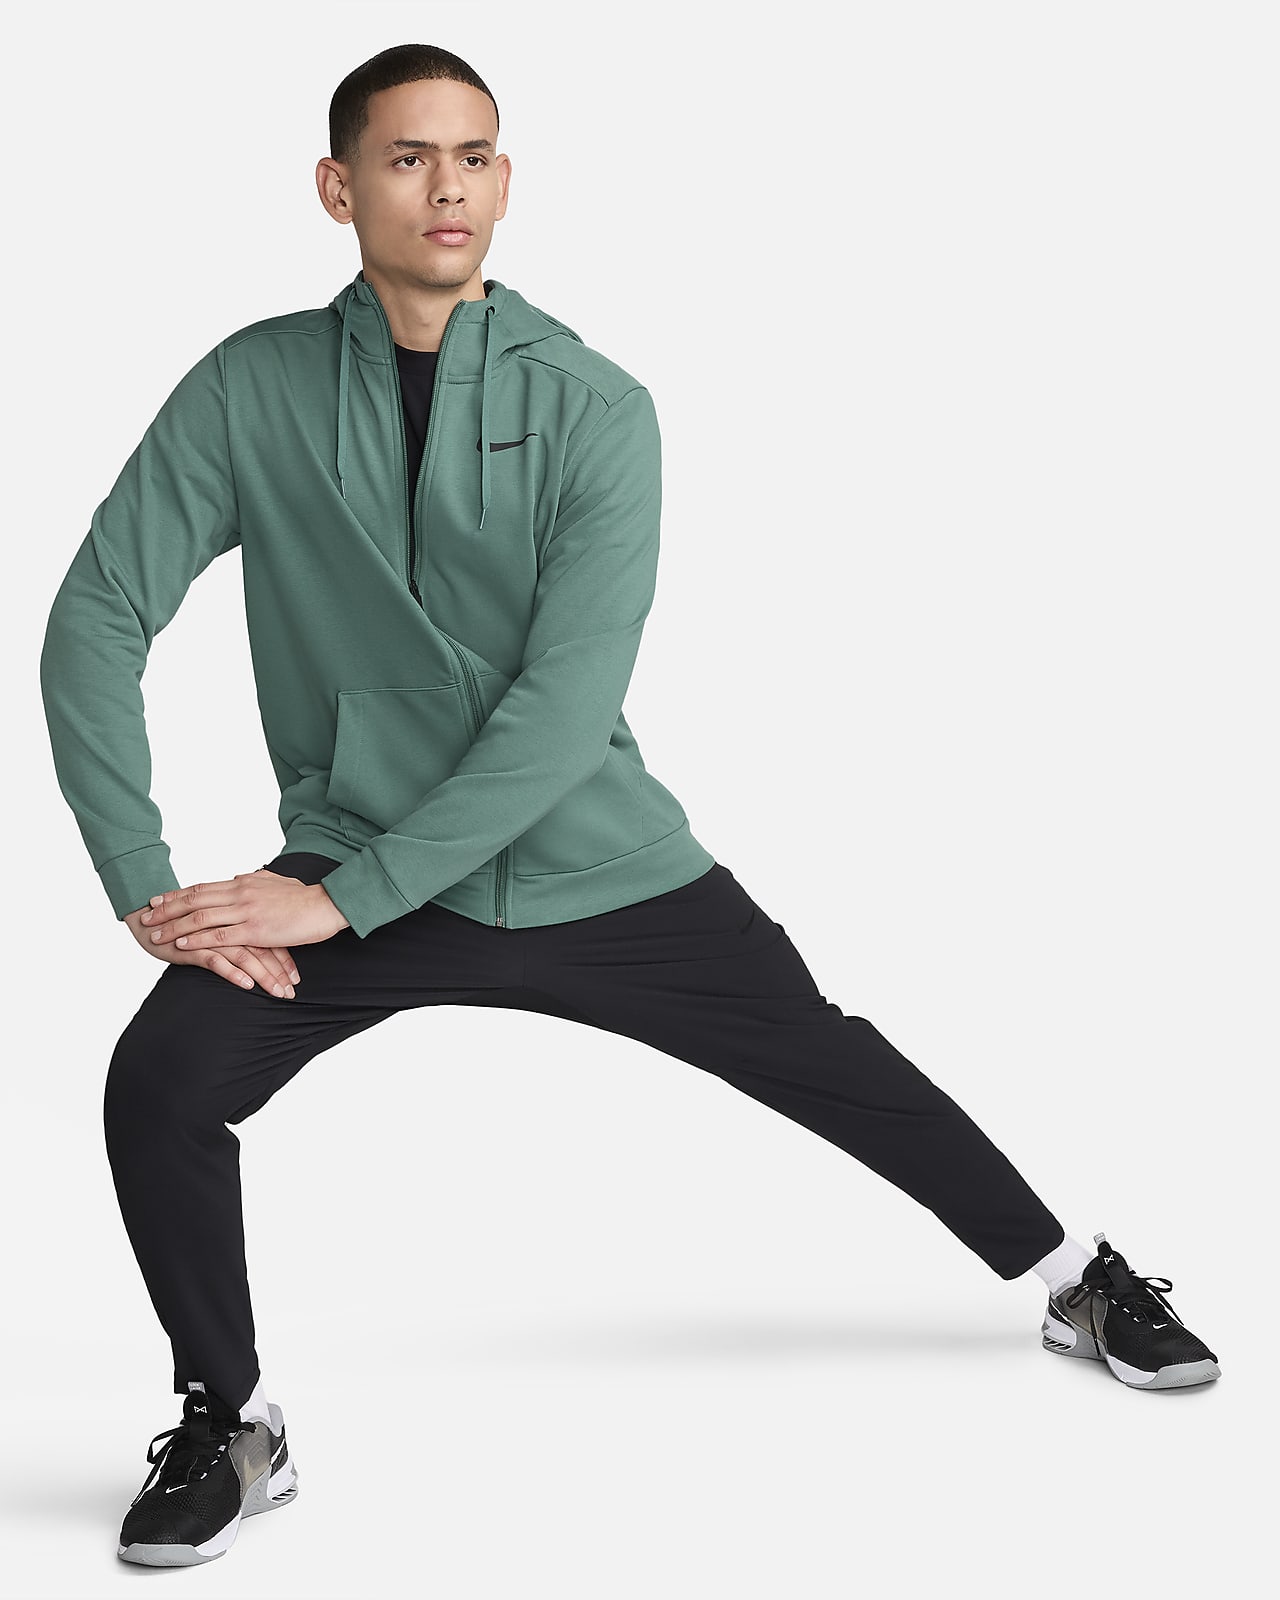 NZ Muscle Pullover Hoodie : Stylish new Hooded Sweatshirt : NZ Muscle